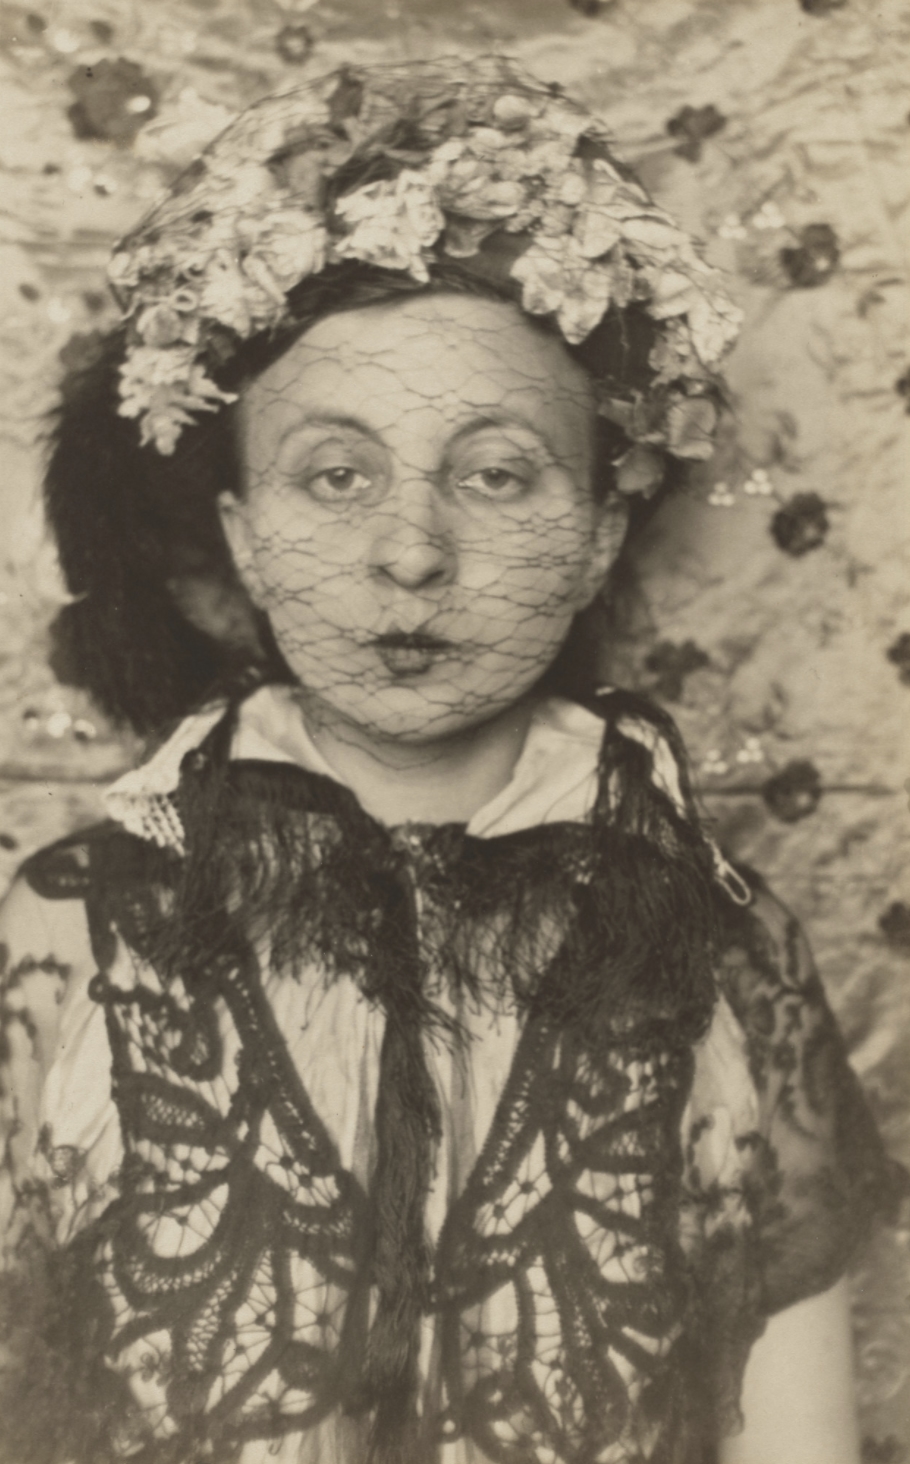 Gertrud Arndt, Untitled (Masked Self-Portrait, Dessau), 1930, gelatinous silver print, 22.9 x 14.3 cm (MoMA)